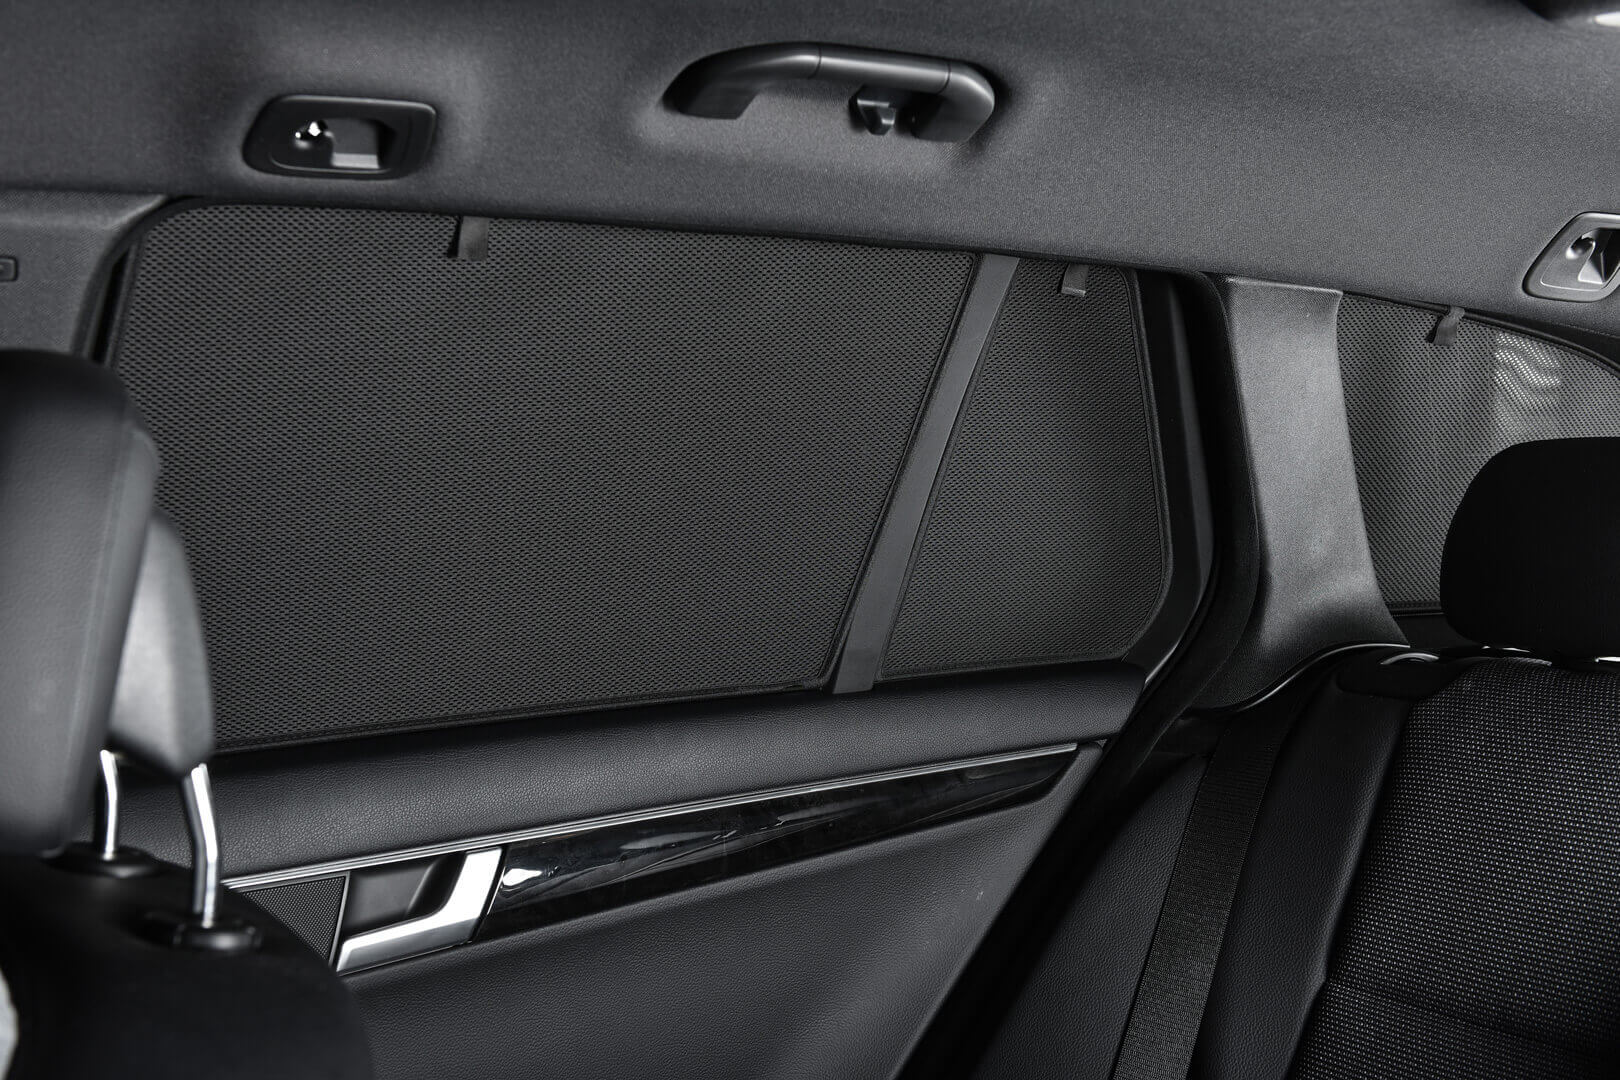 Car Shades Honda Civic 5dr 2015-21 Rear Door Set